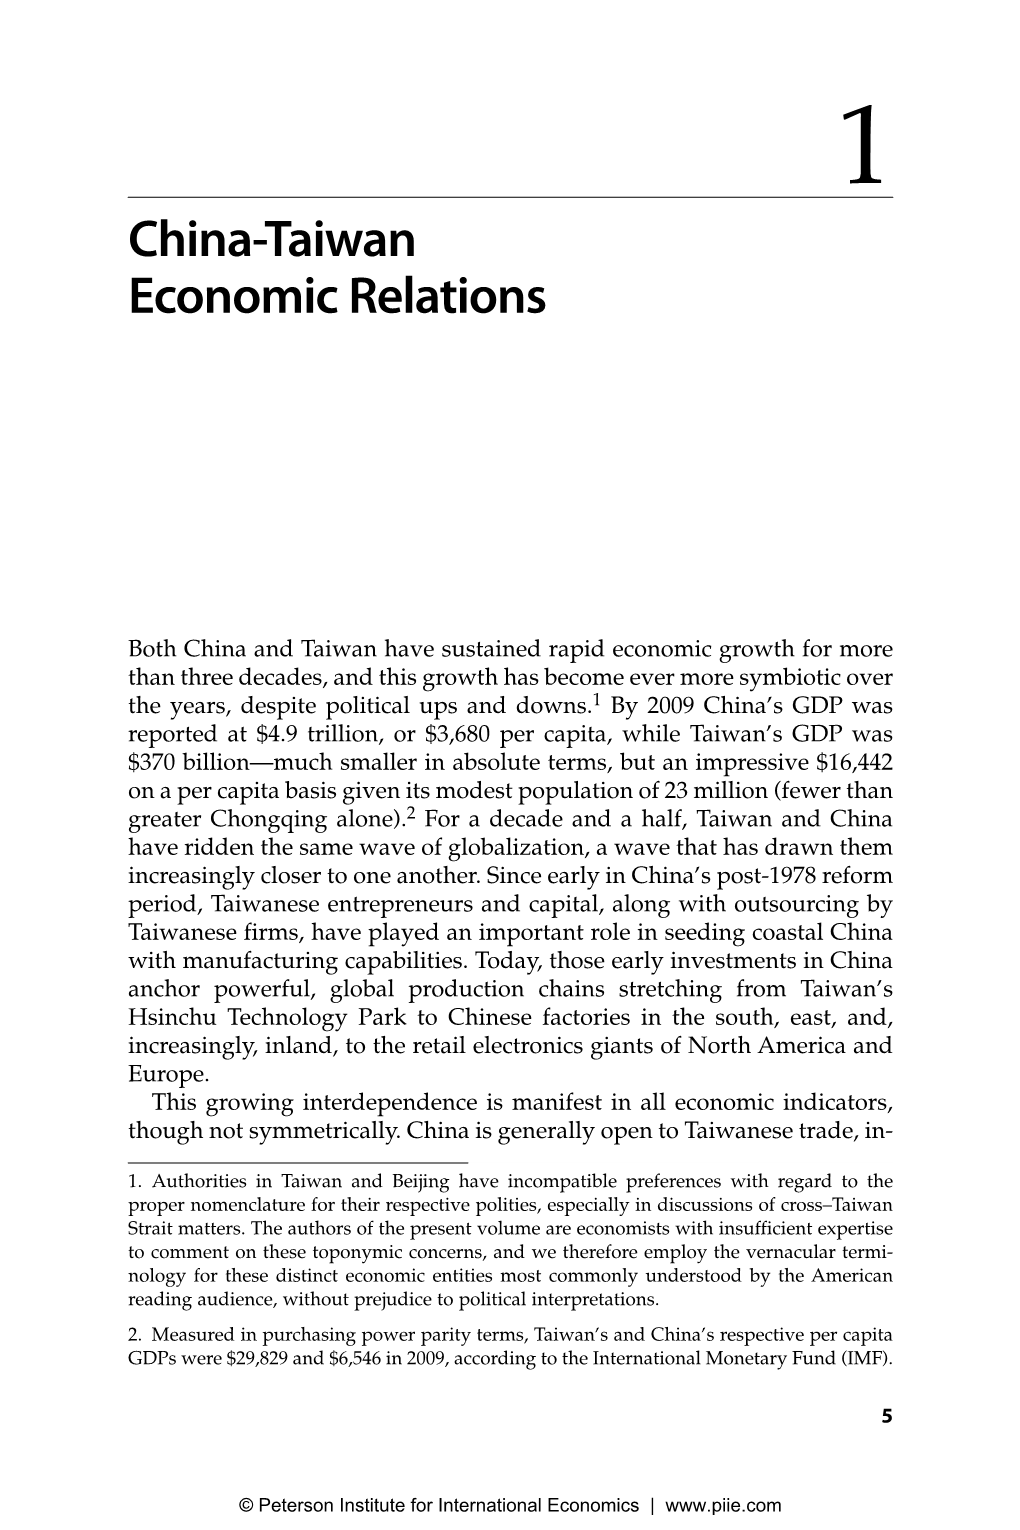 China-Taiwan Economic Relations